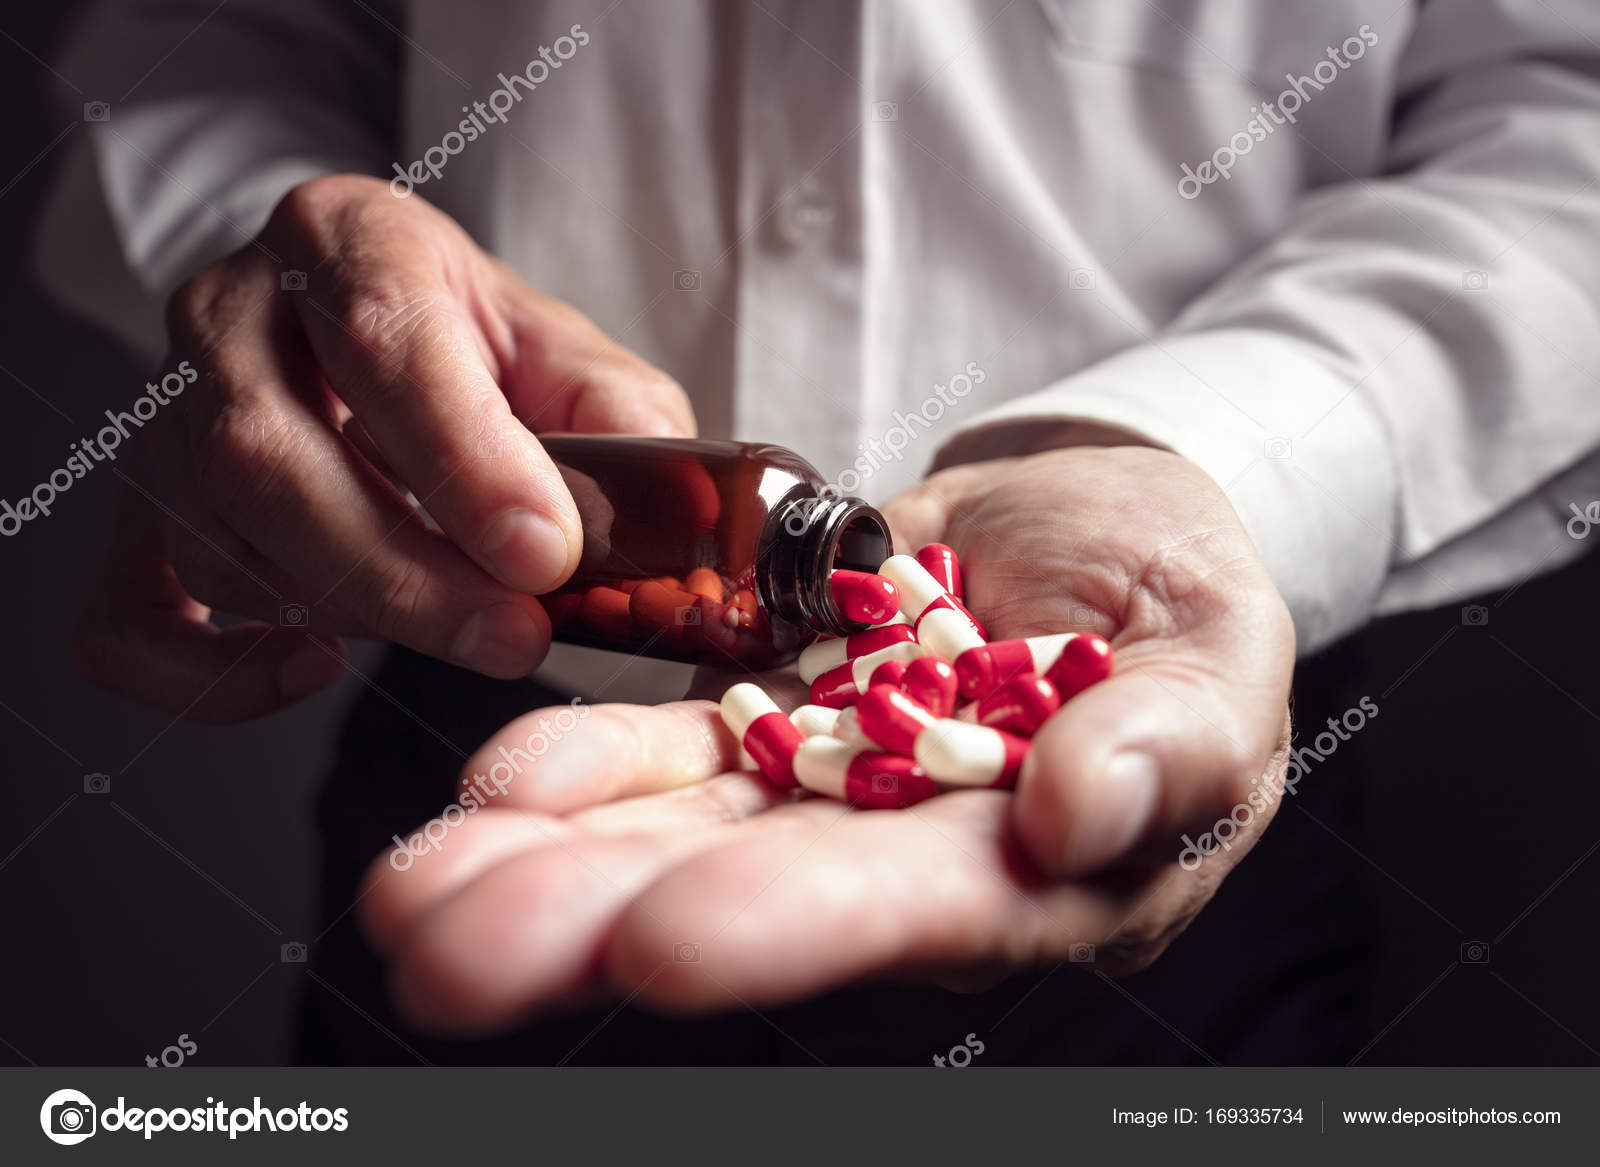 Кто пил антидепрессанты. Лекарство. Наркотические медпрепараты. Реклама лекарственных препаратов. Запрещенная реклама лекарств.